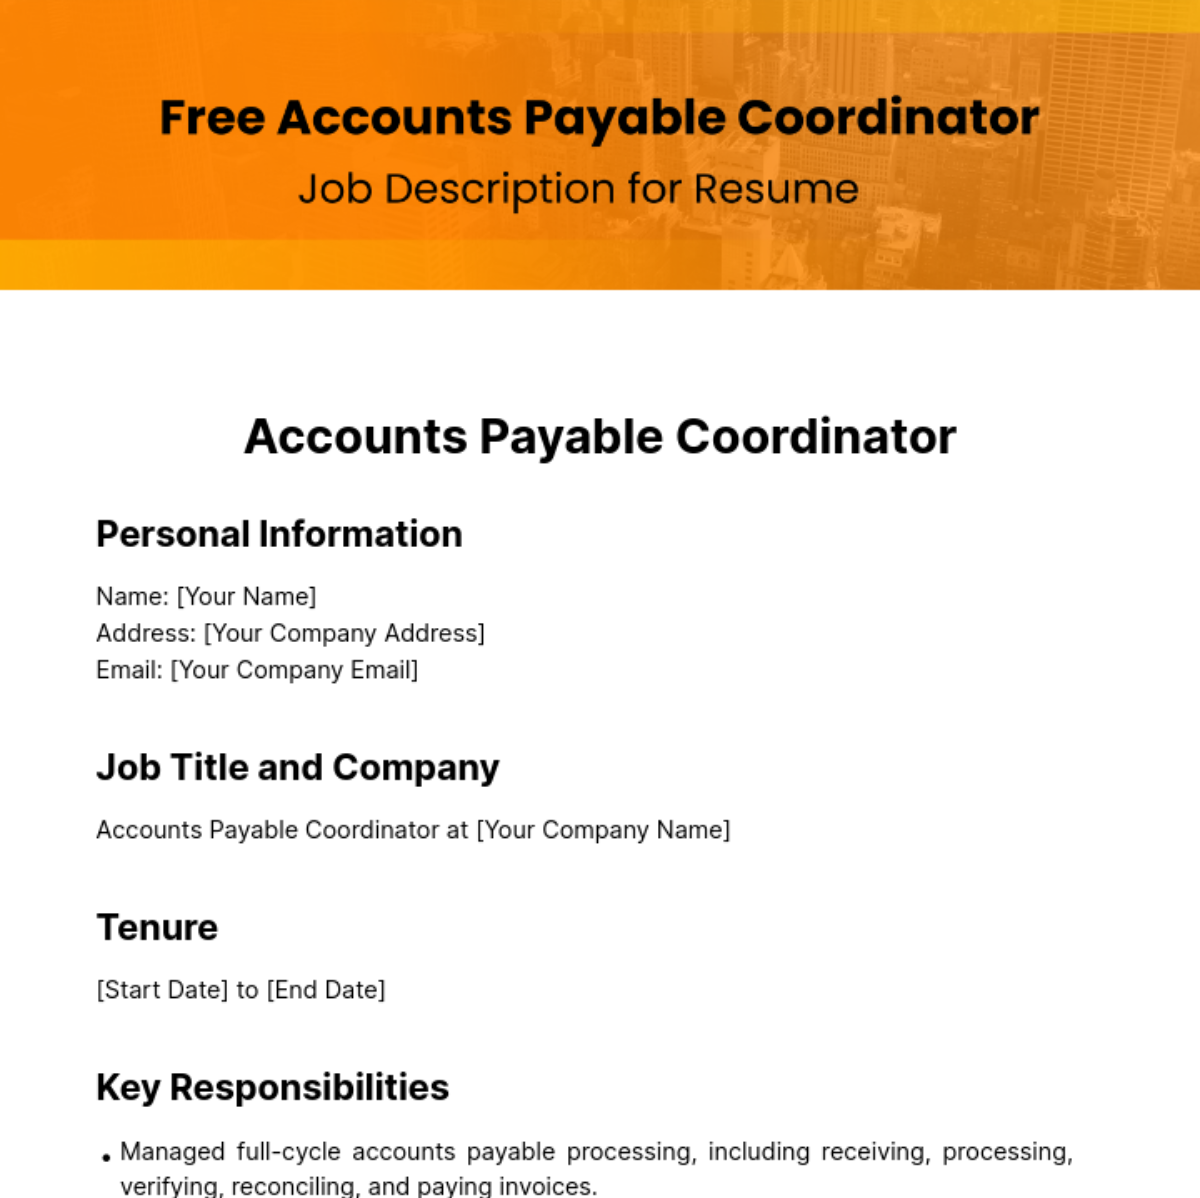 Free Accounts Payable Job Description for Resume Template